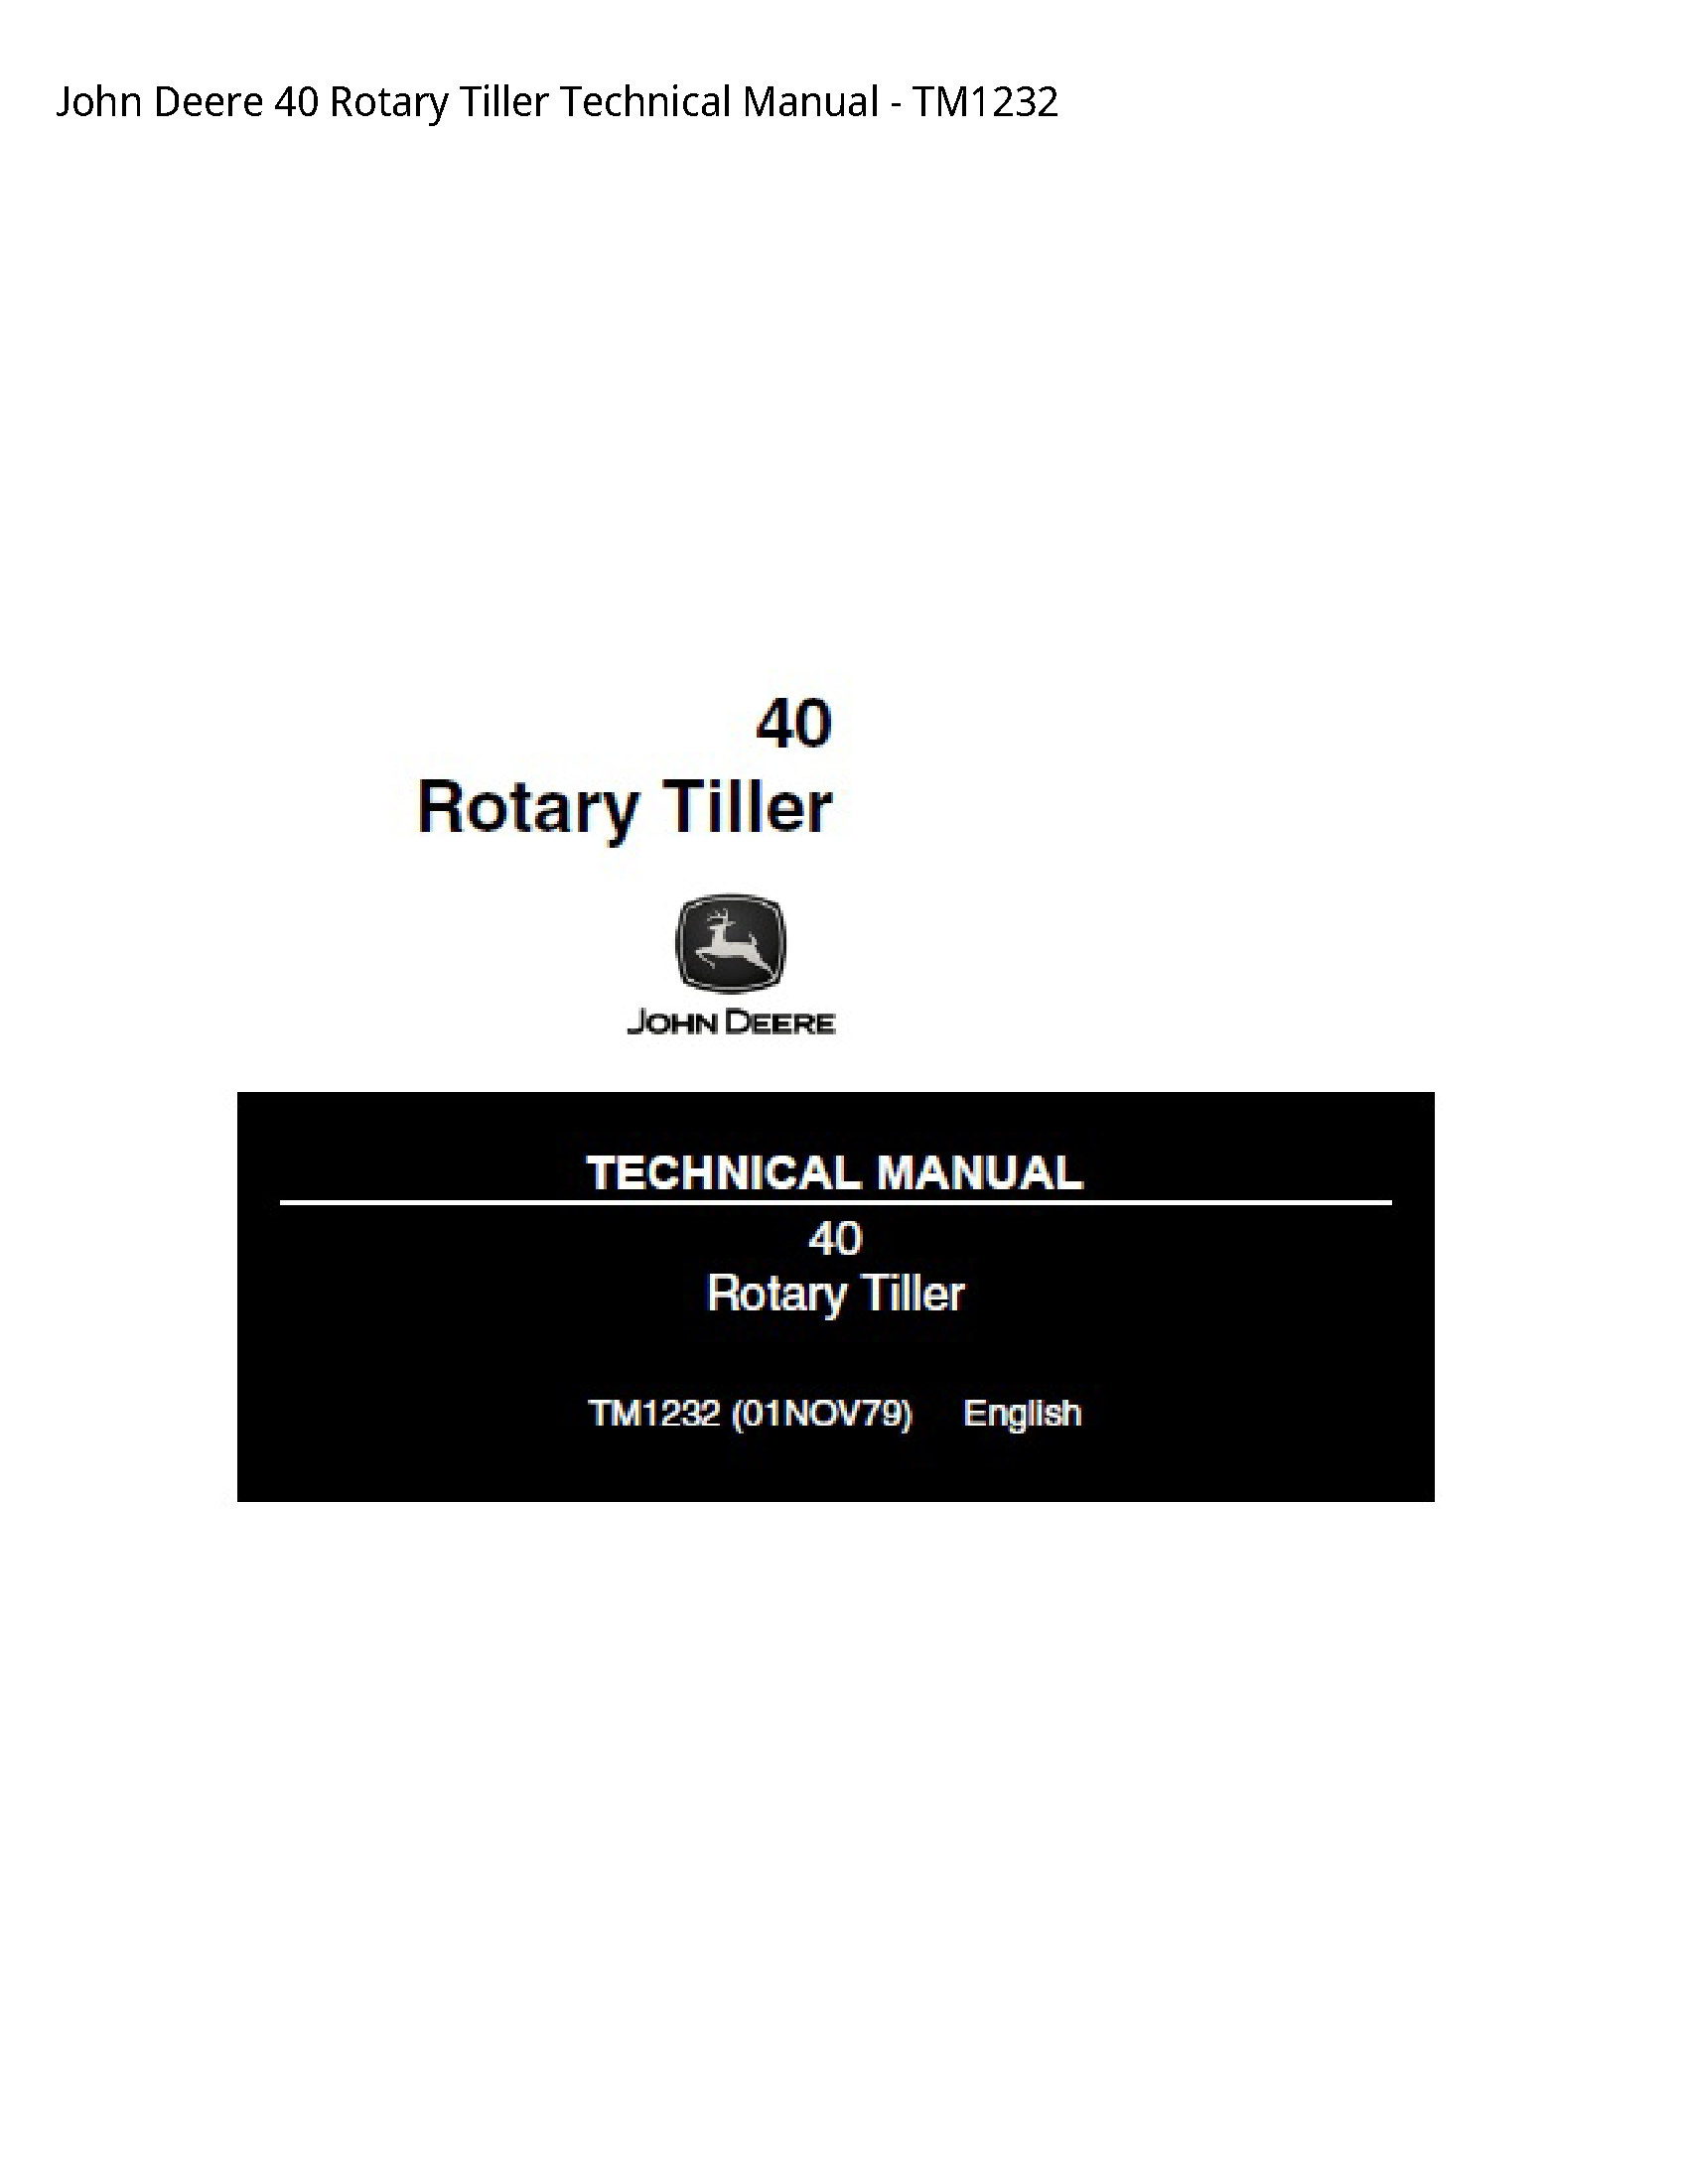 John Deere 40 Rotary Tiller Technical manual